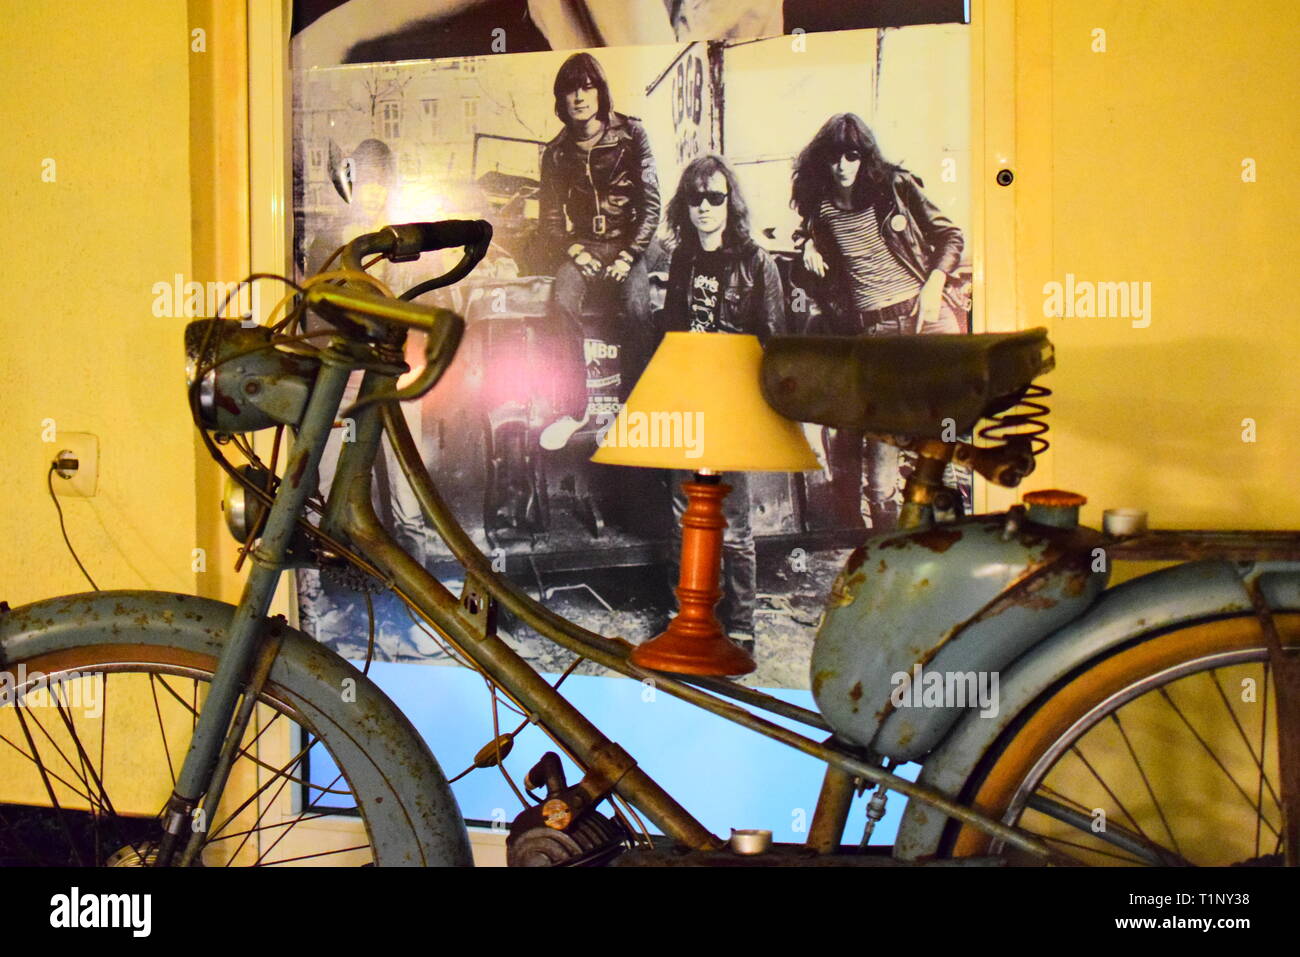 esmoriz,portugal - bar with ramones poster and vintage motor bike.august 2016. Stock Photo